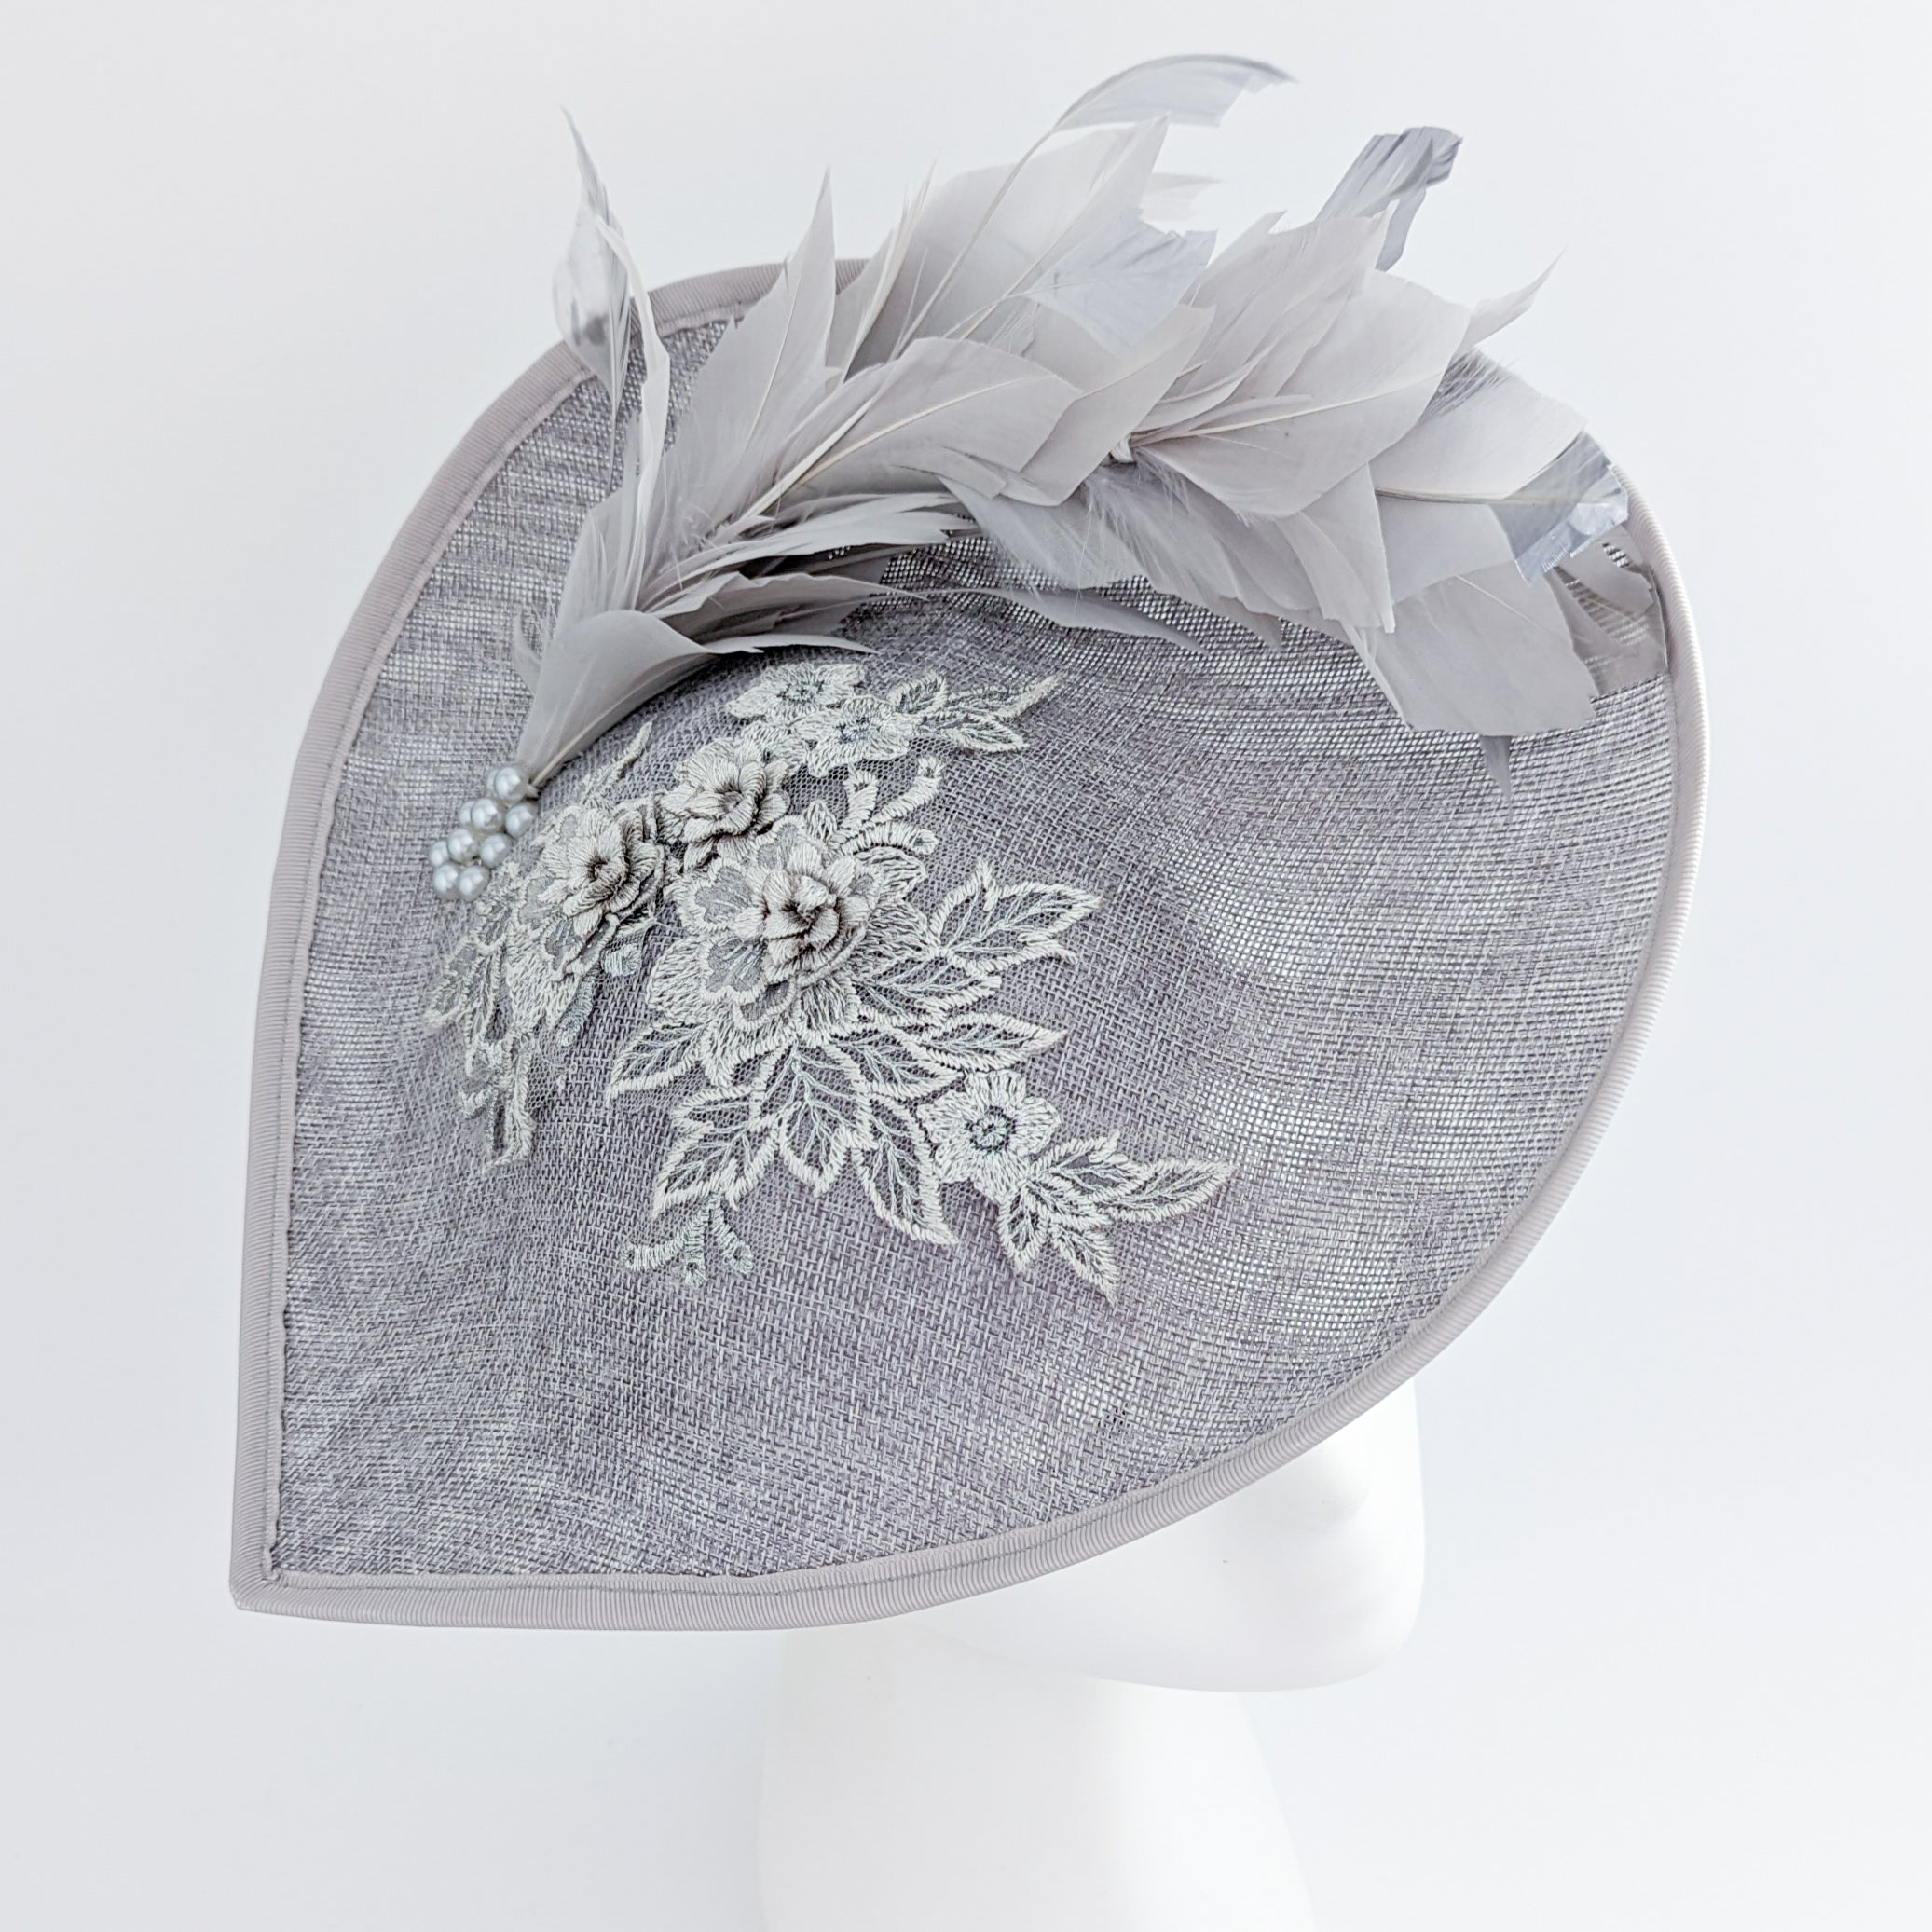 Grey large teardrop feather fascinator hat